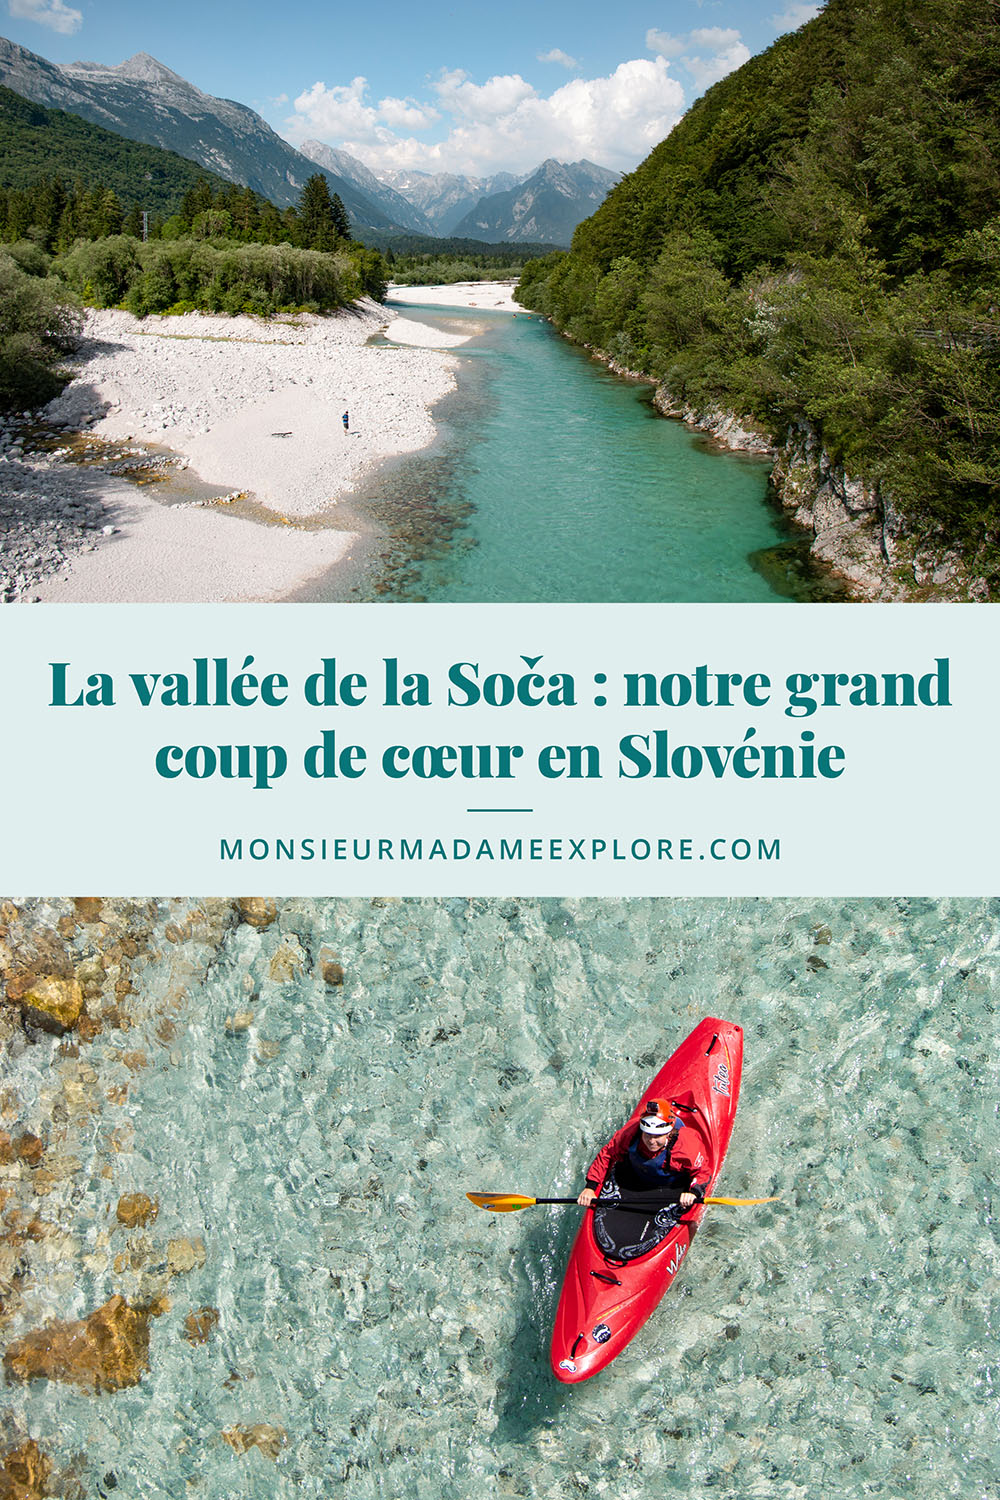 La vallée de la Soča : notre grand coup de cœur en Slovénie, Monsieur+Madame Explore, Blogue de voyage, Slovénie / Visiting Soča Valley, Slovenia